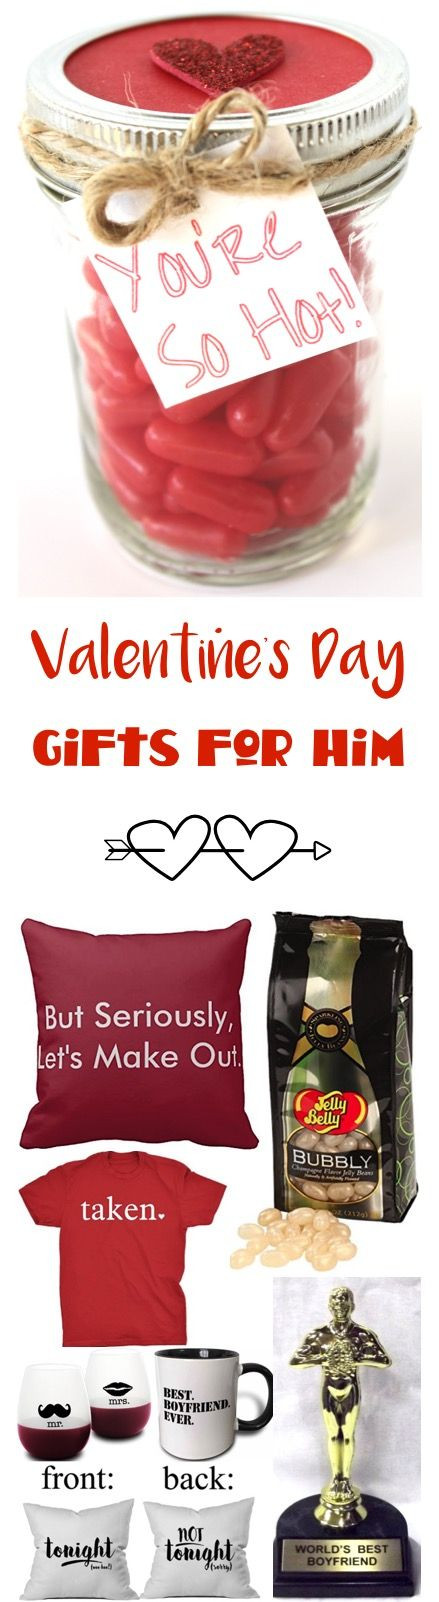 Romantic Gift Ideas Boyfriends
 17 Best ideas about Romantic Gifts on Pinterest